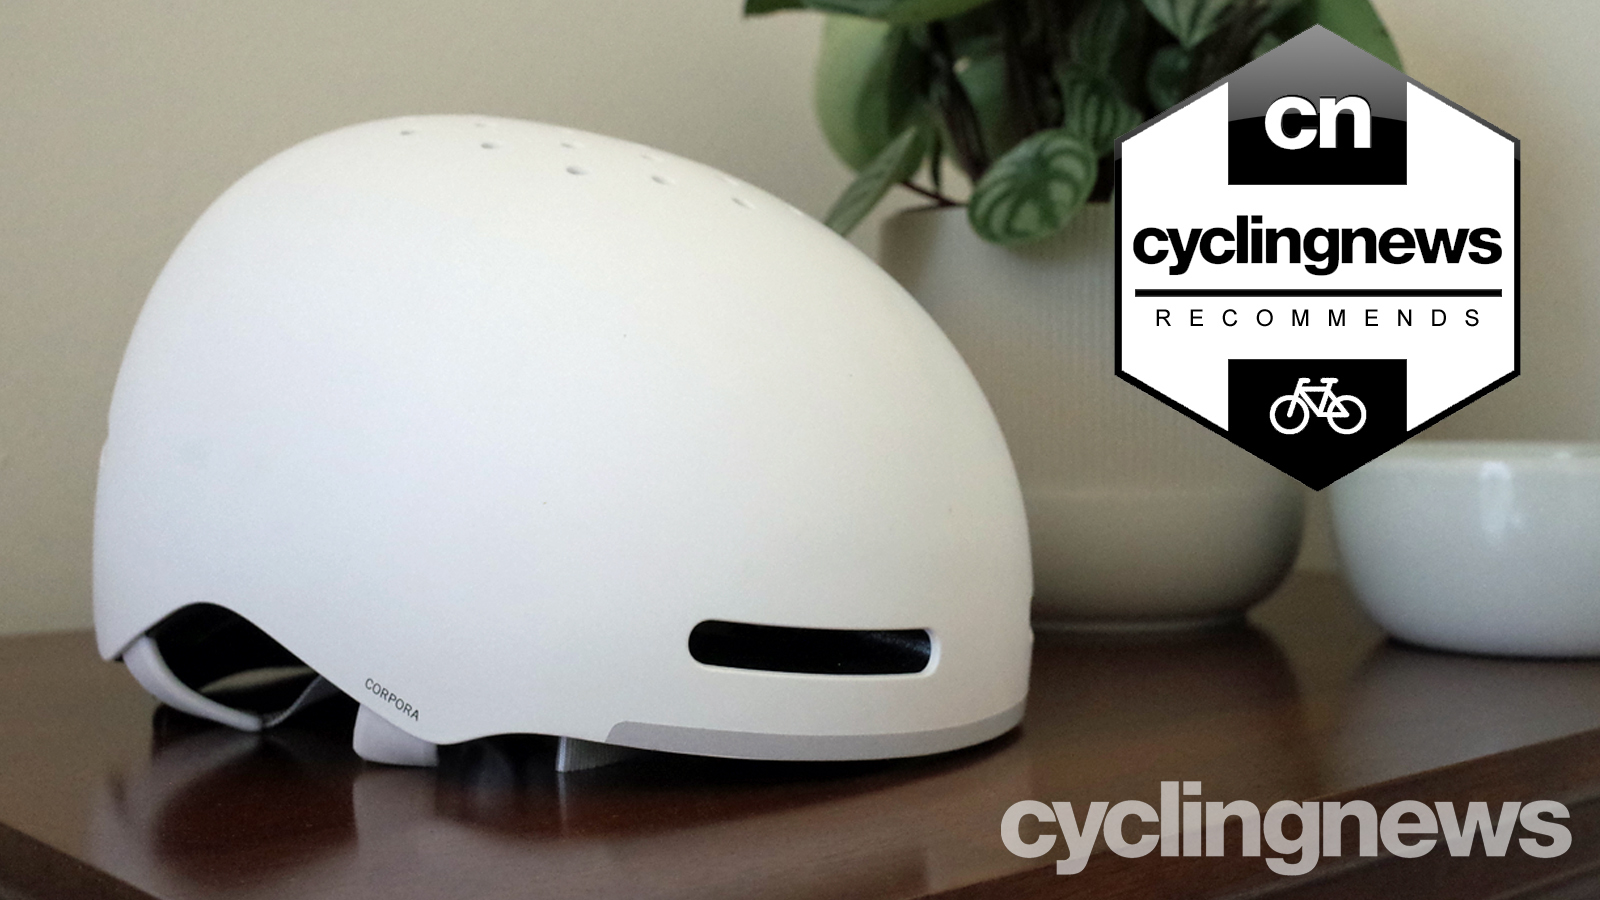 POC Corpora AID commuter helmet review | Cyclingnews